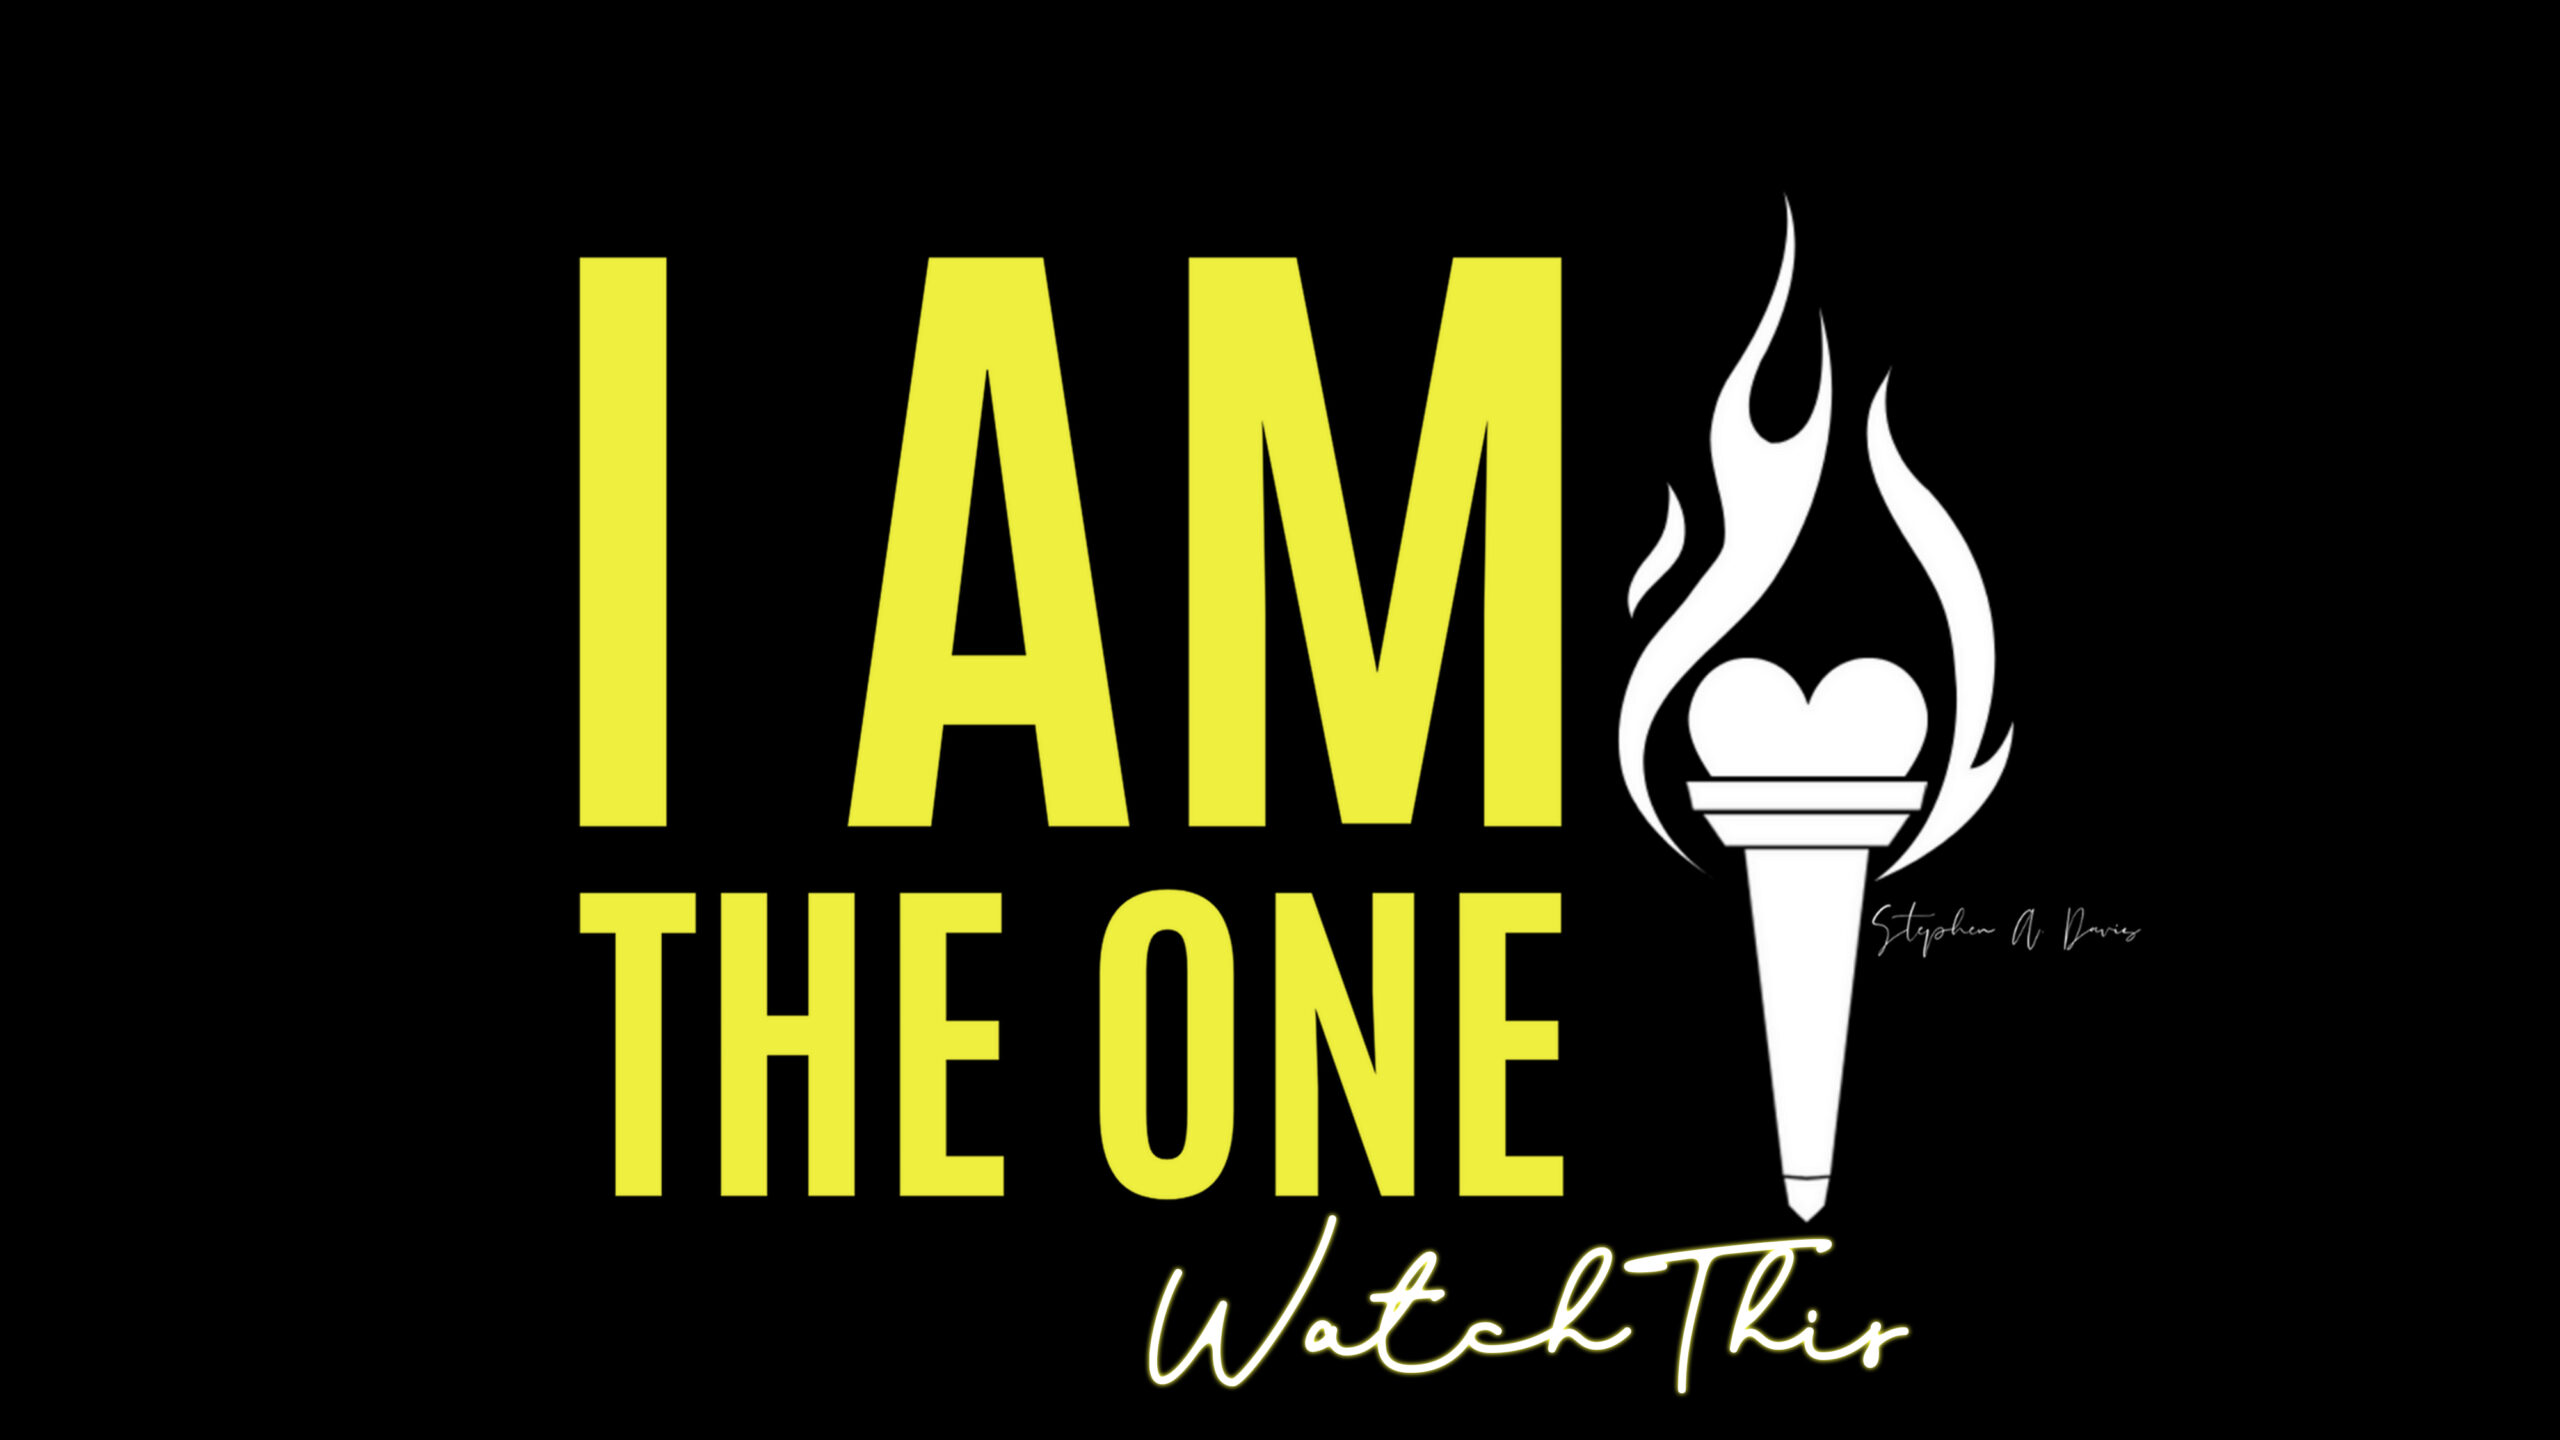 I Am The One “Watch This” – Bishop Stephen A. Davis